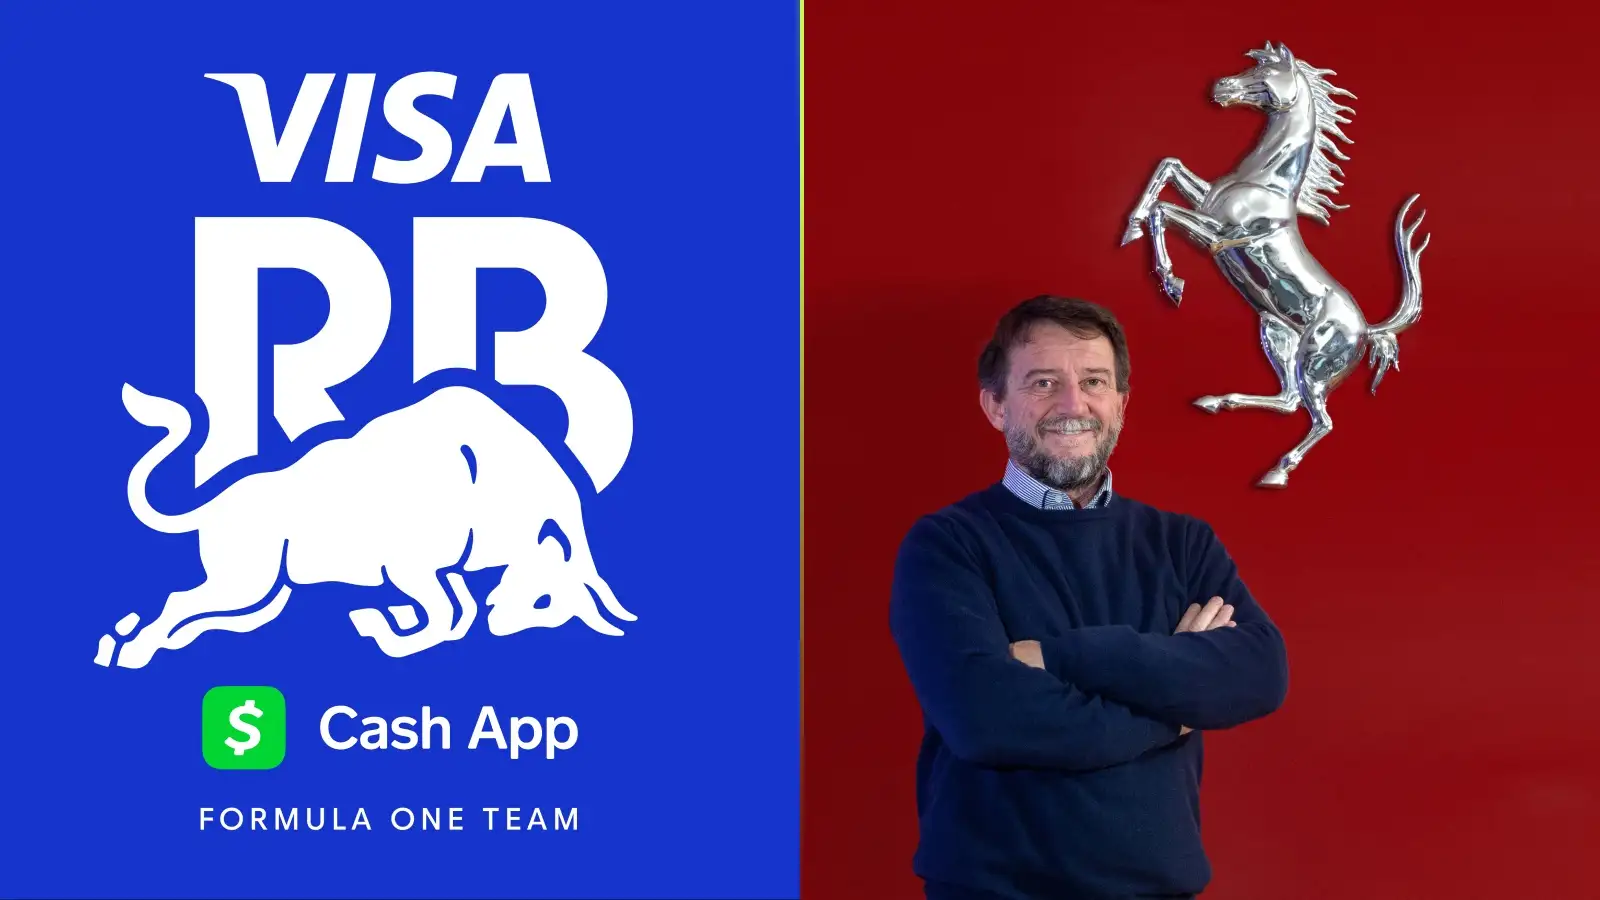 The Visa Cash App RB logo and Giovanni Soldini 